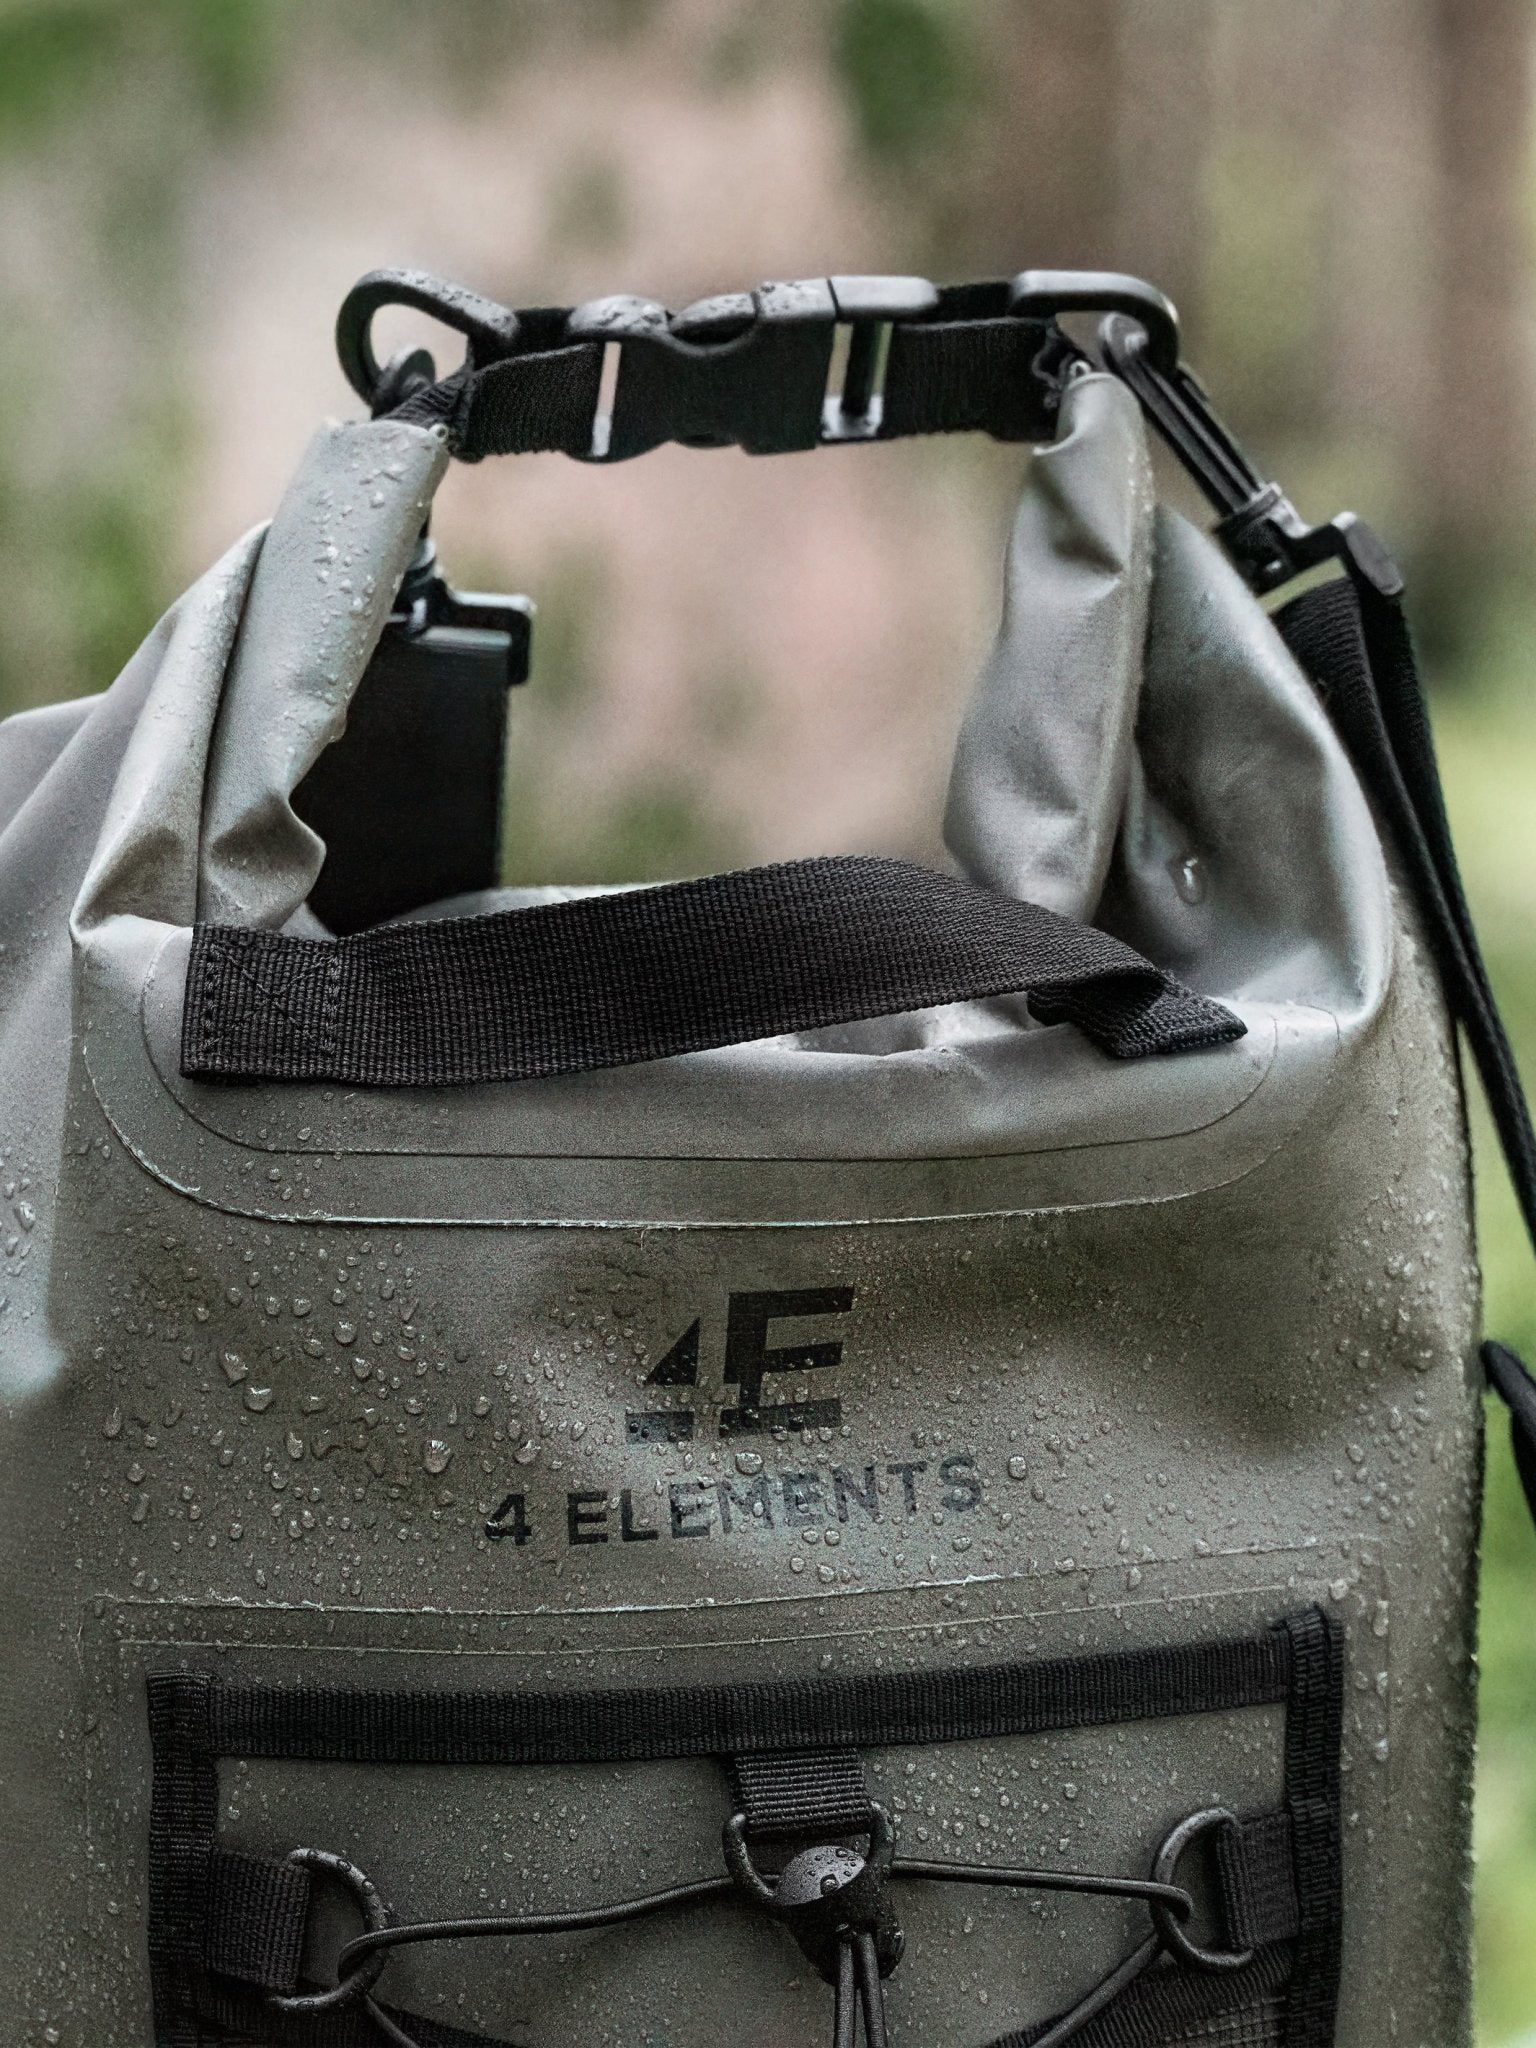 4 Elements Clothing 4 Elements - Waterproof Bag And Dry Bag Roll Top Waterproof Rucksack, Wet Bag & Hiking, Waters Sports or Camping Bag, 20L Drybag 